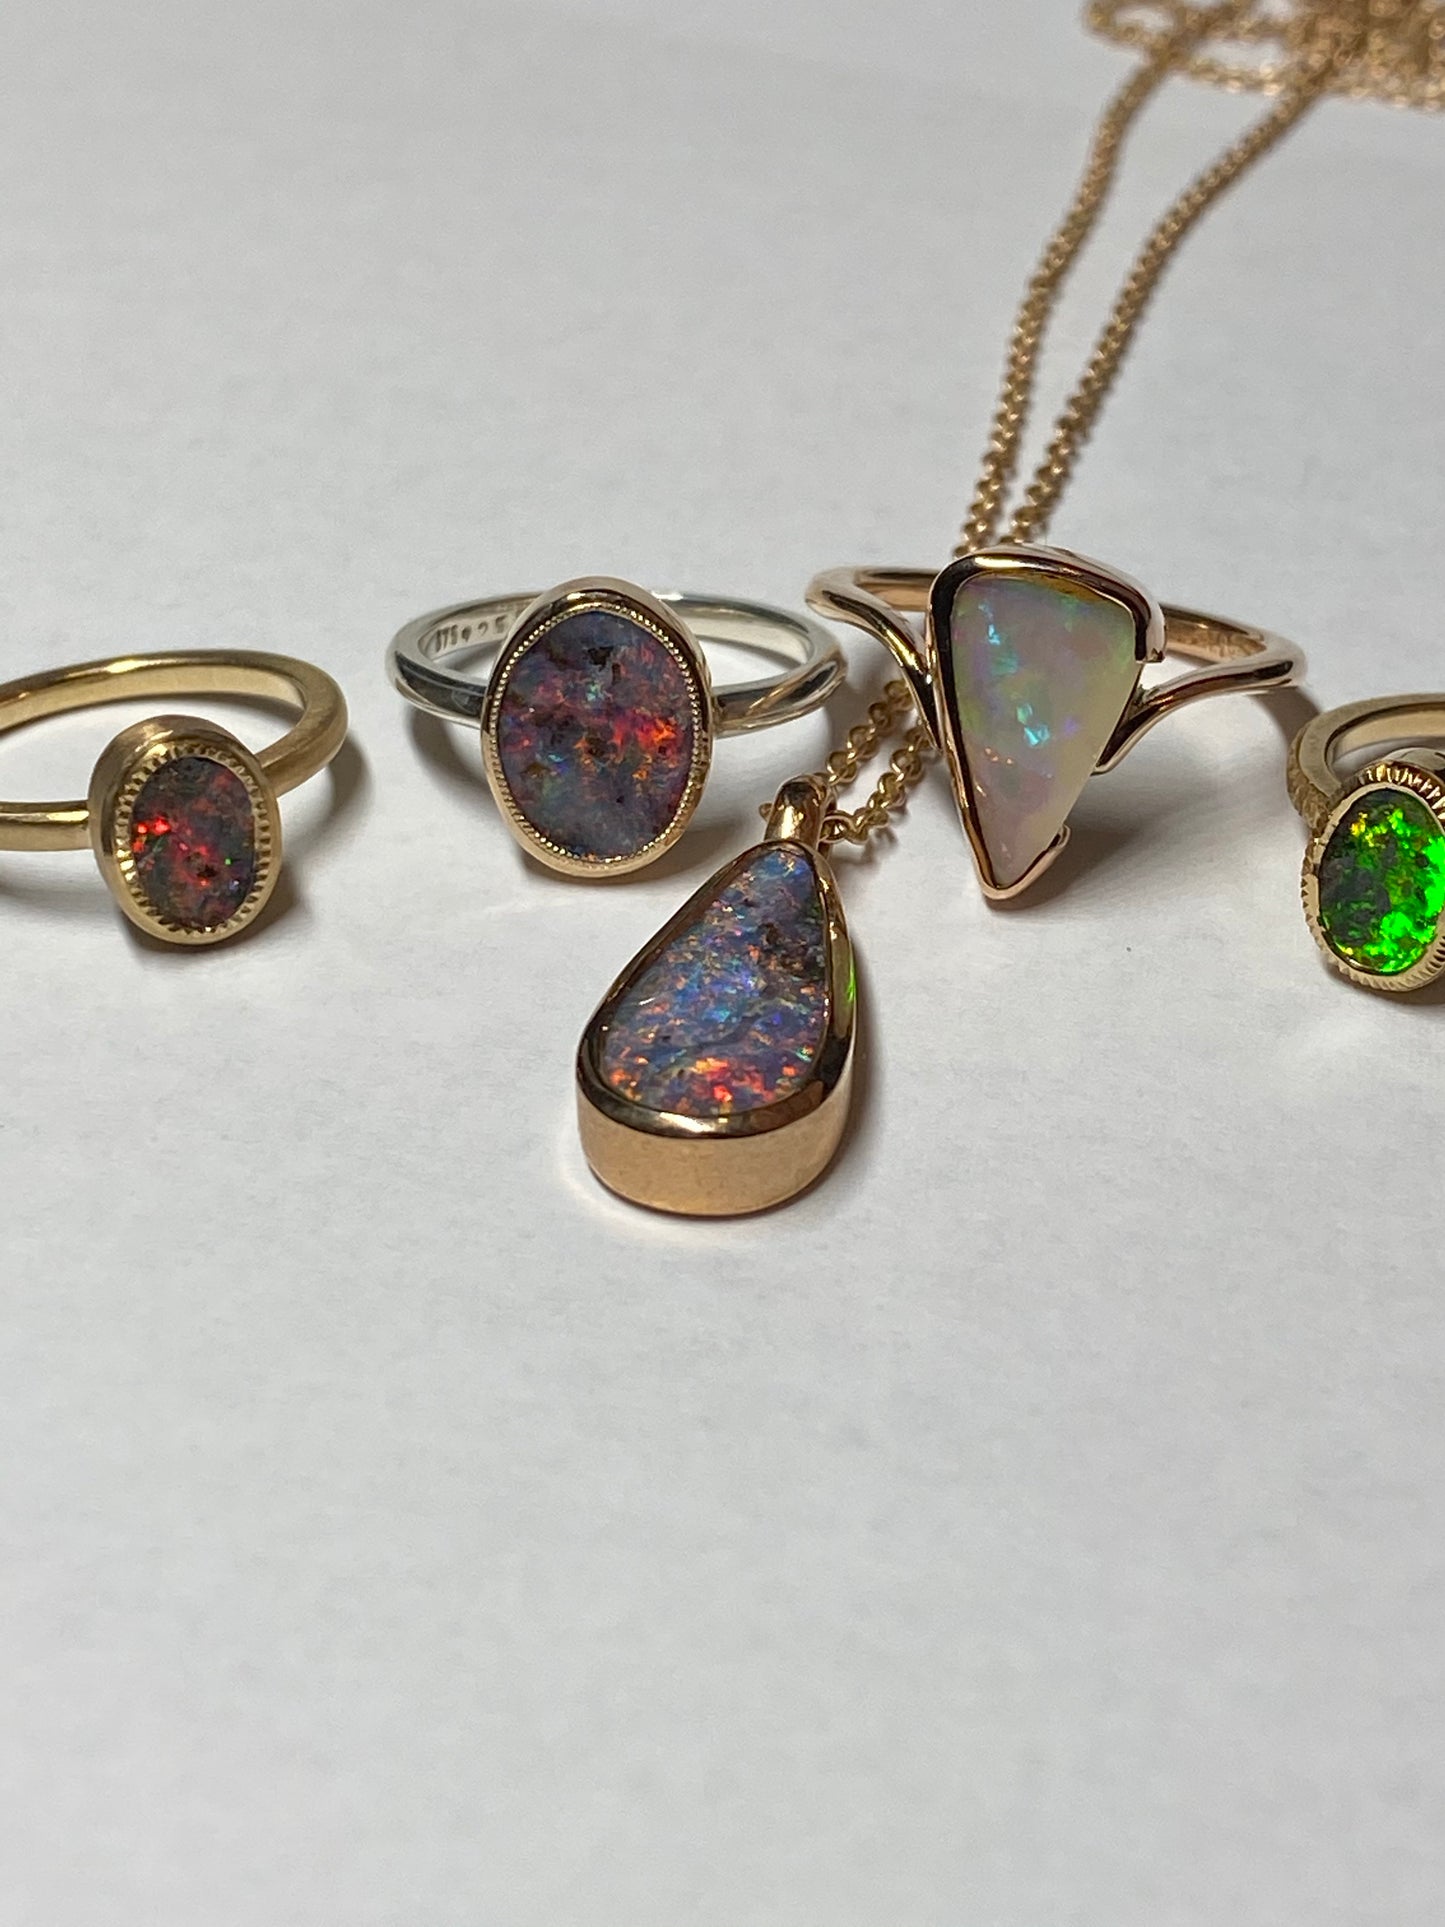 Rainbow Cosmos Opal Pendant